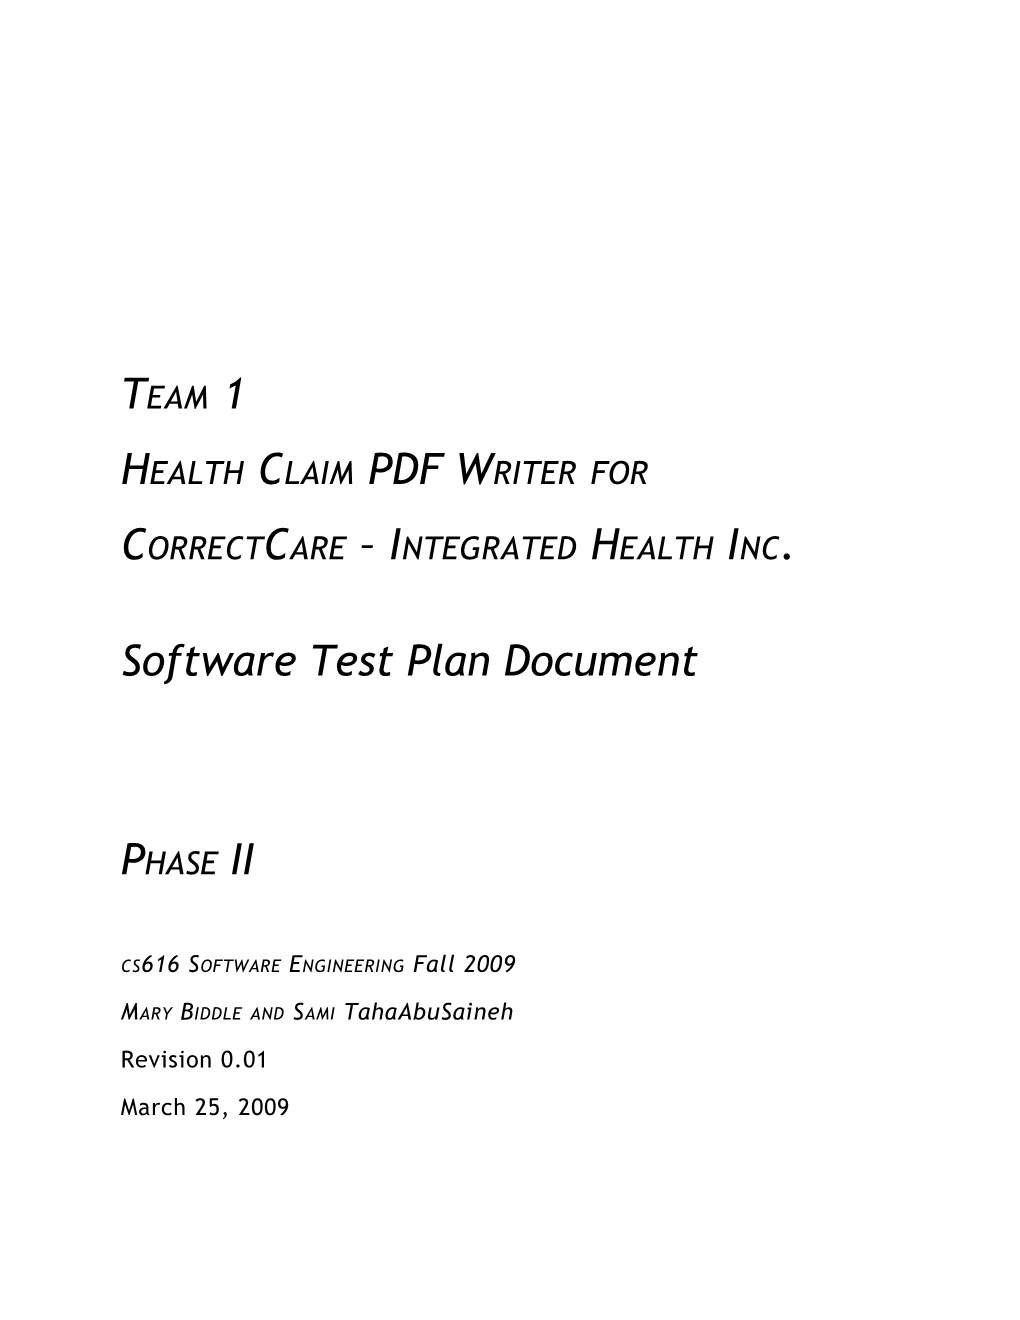 Team1 Health Claim PDF Writer Software Design Document